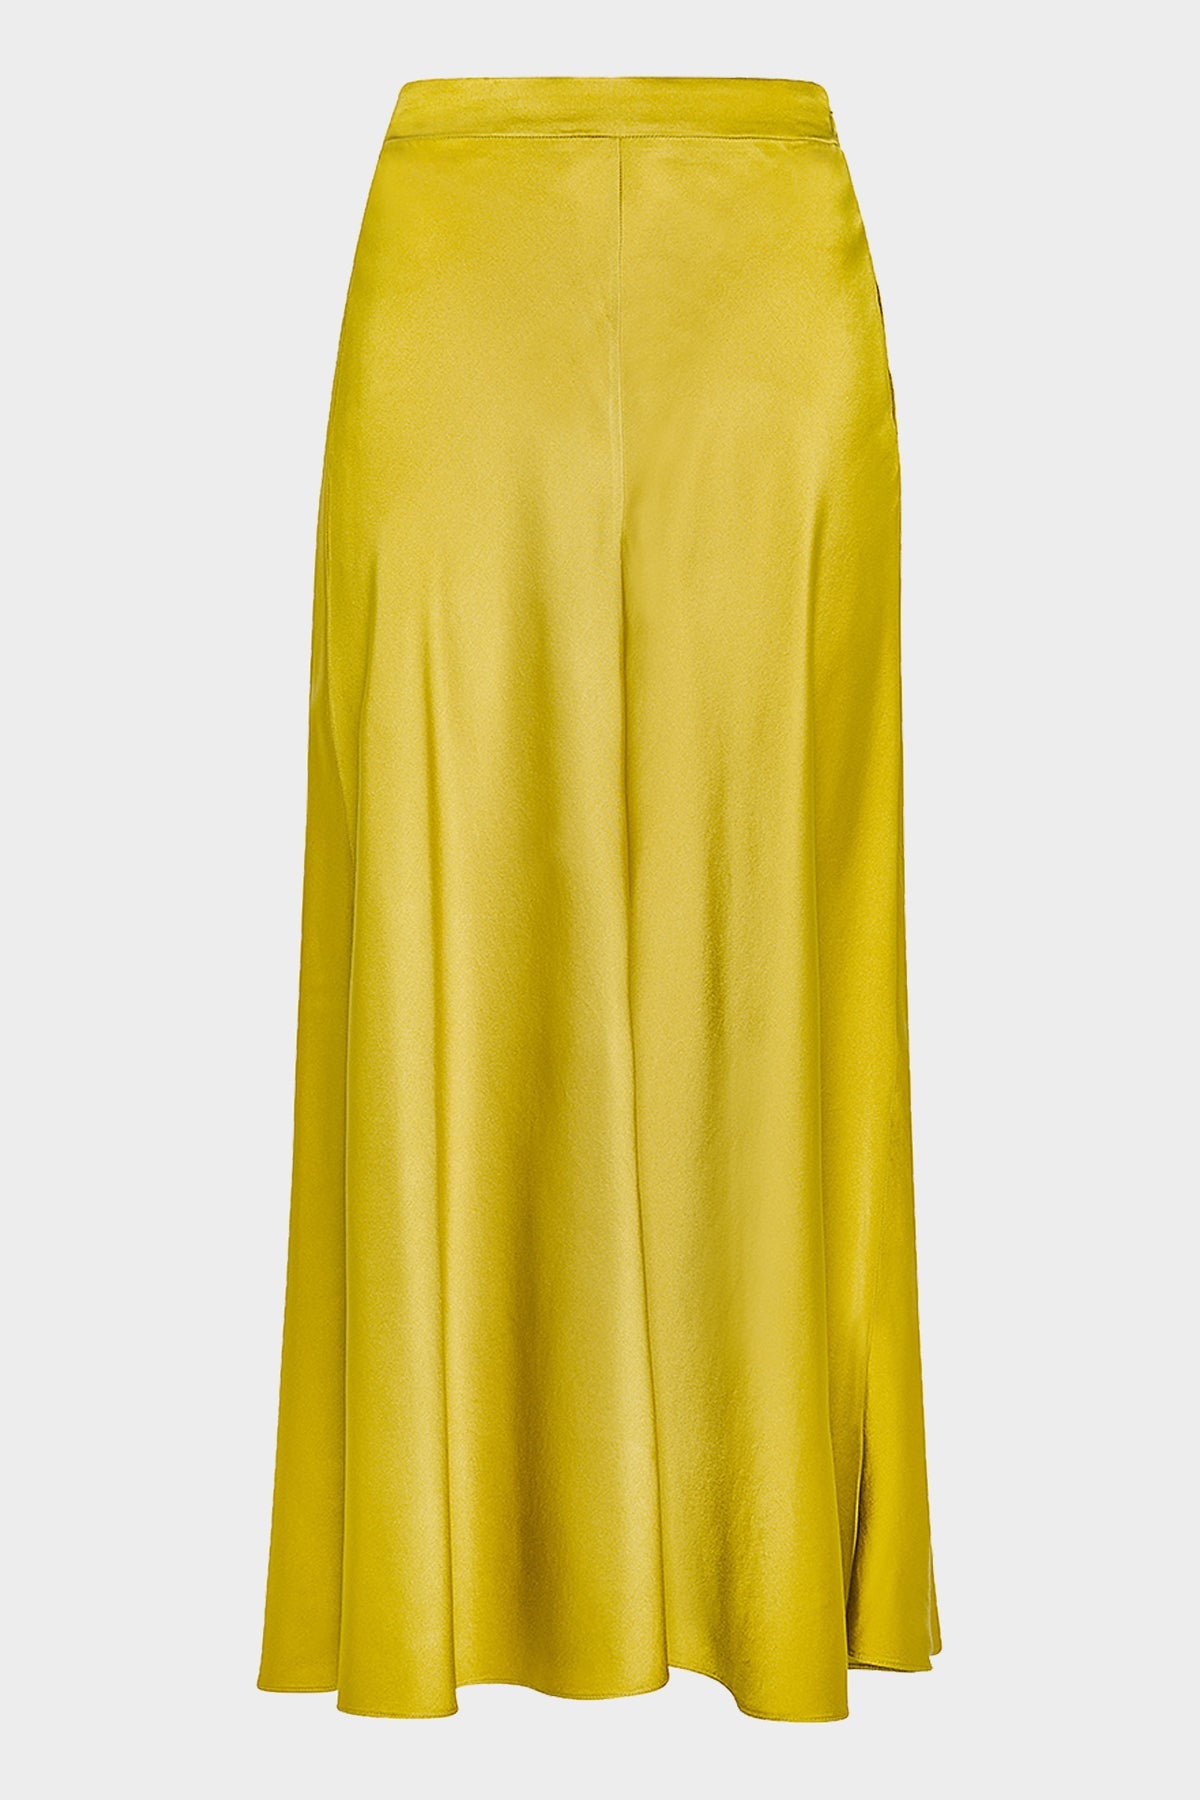 Silk Satin Skirt in Gold - shop-olivia.com